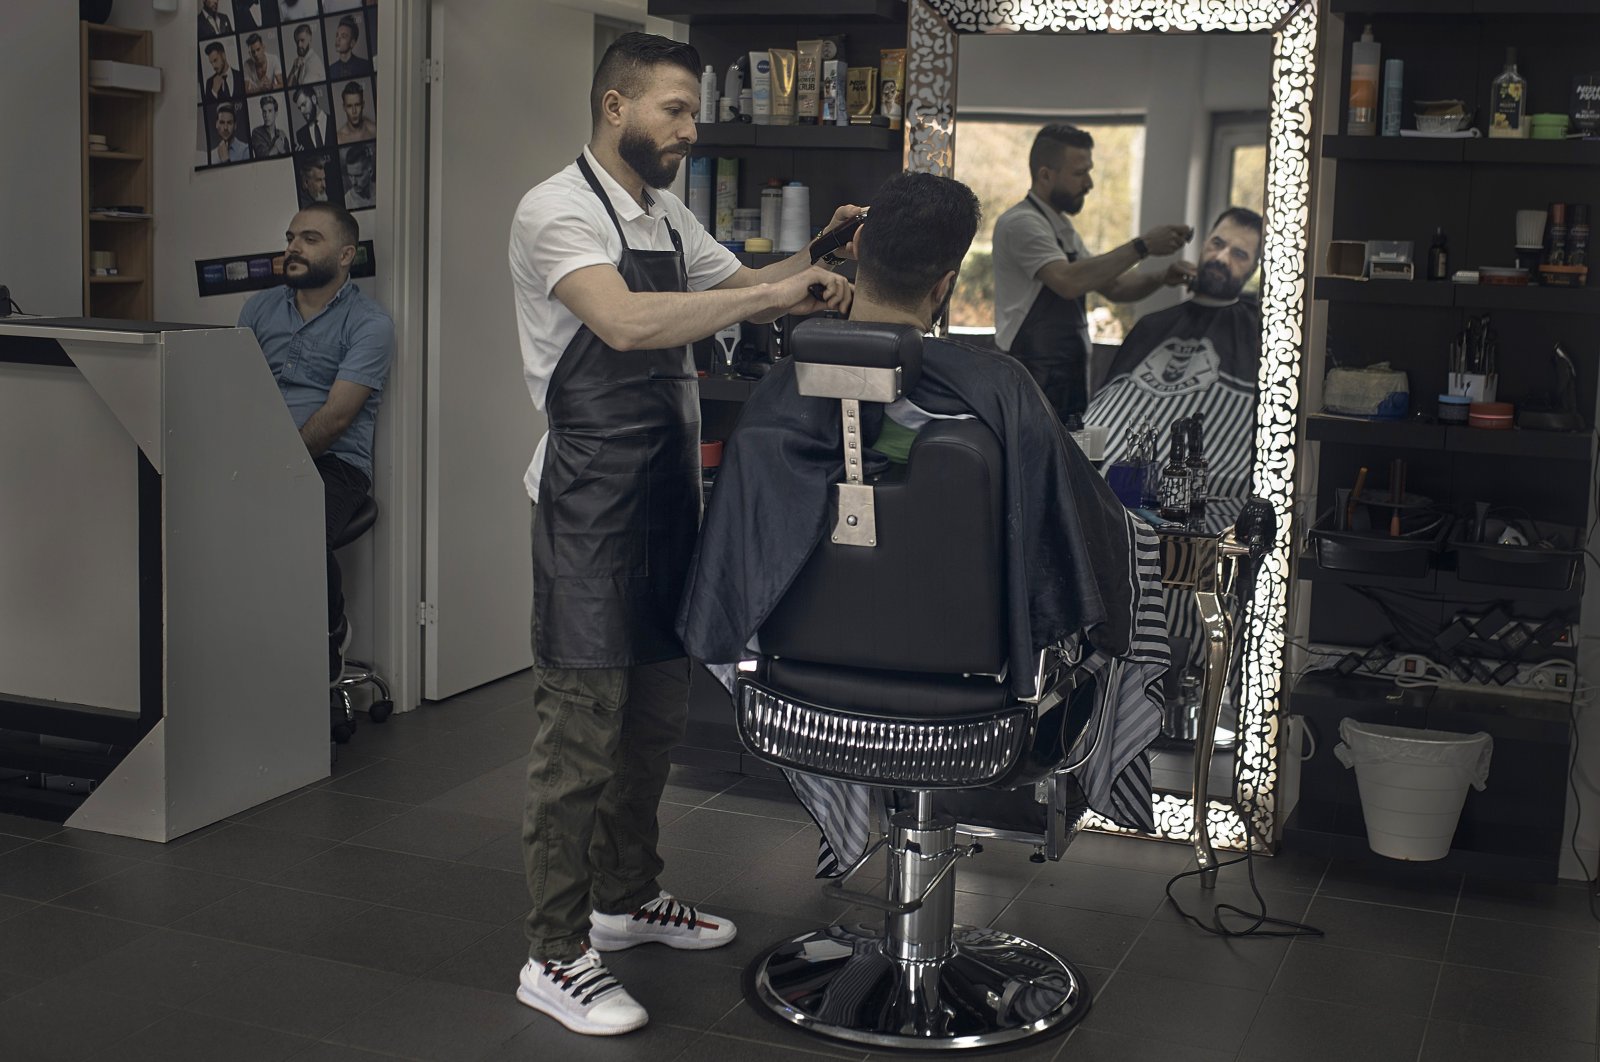 Hairdresser Hasan Derek, 36, from Syria, cuts the hair of a customer in Akalla, Rinkeby-Kista borough, Stockholm, Sweden, April 28, 2020. (AP Photo)